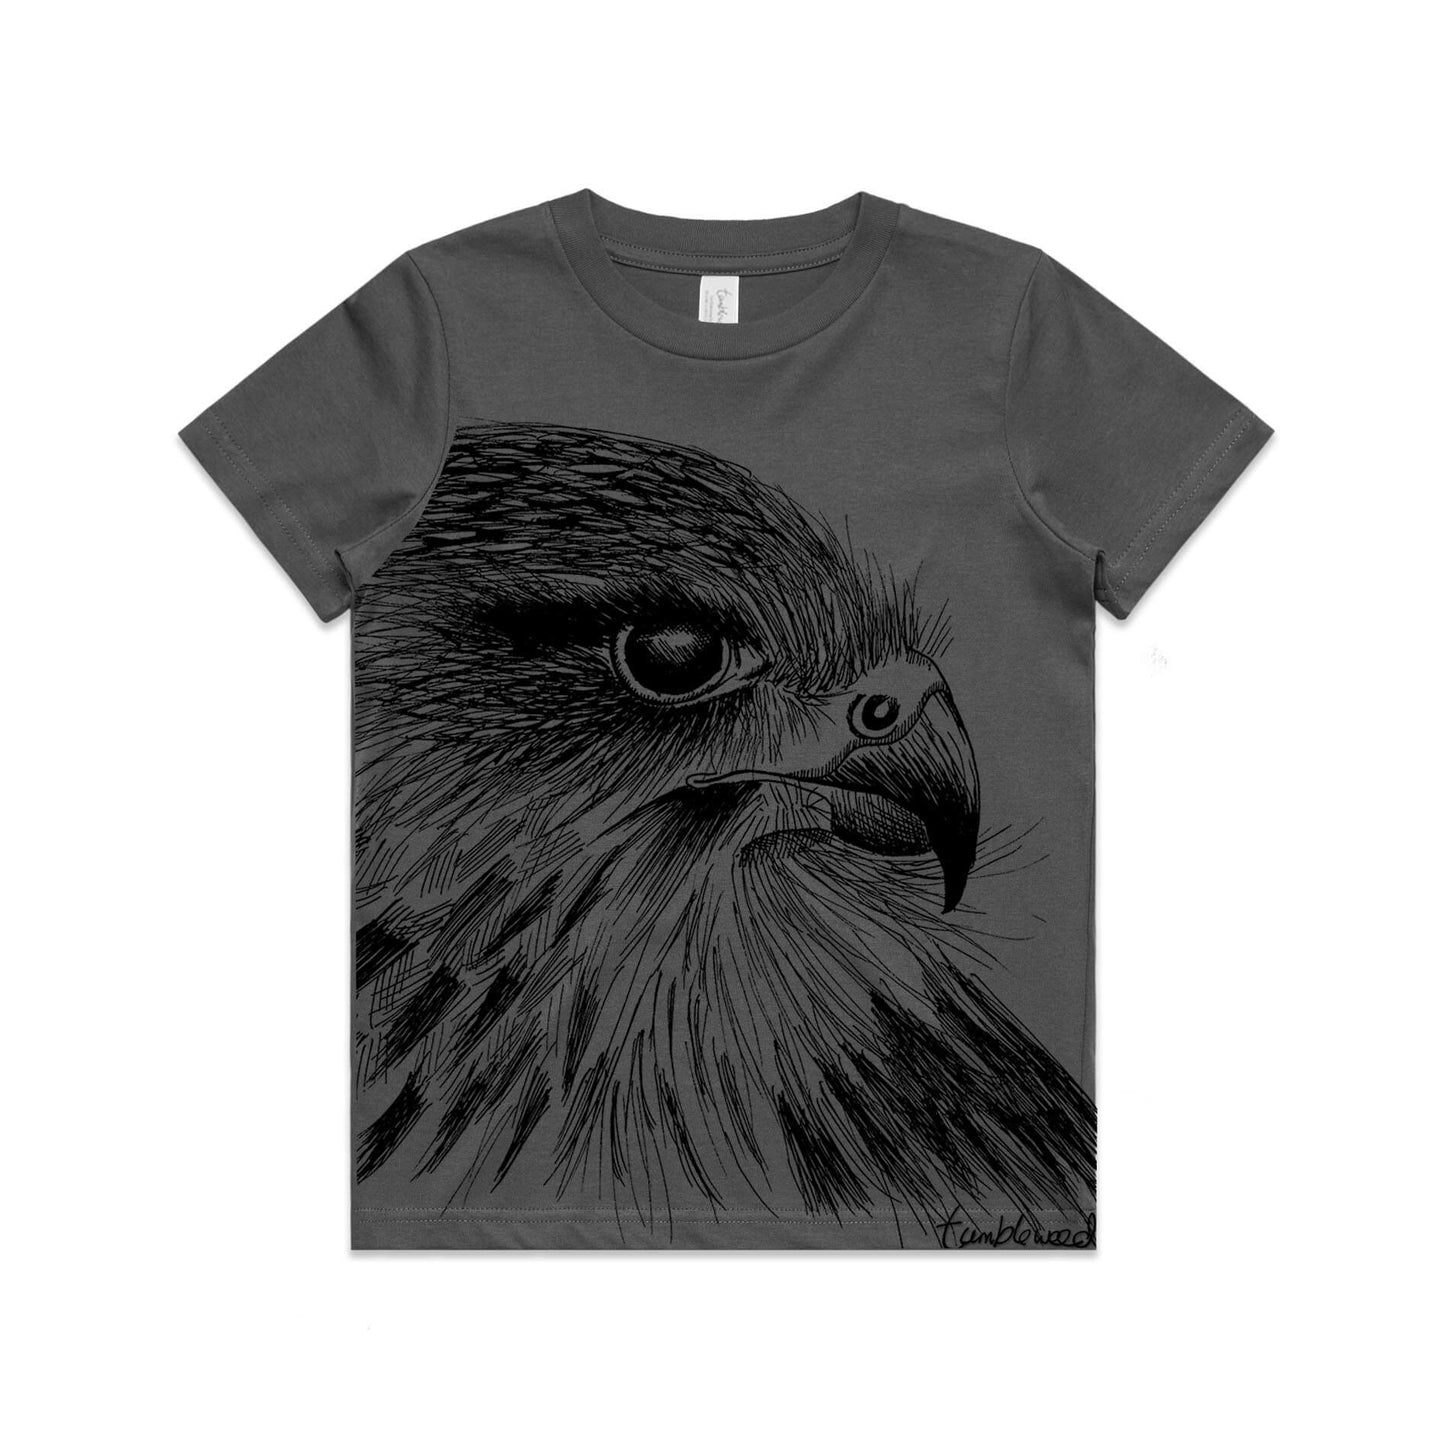 Charcoal, cotton kids' t-shirt with screen printed Kids Karearea/NZ Falcon design.